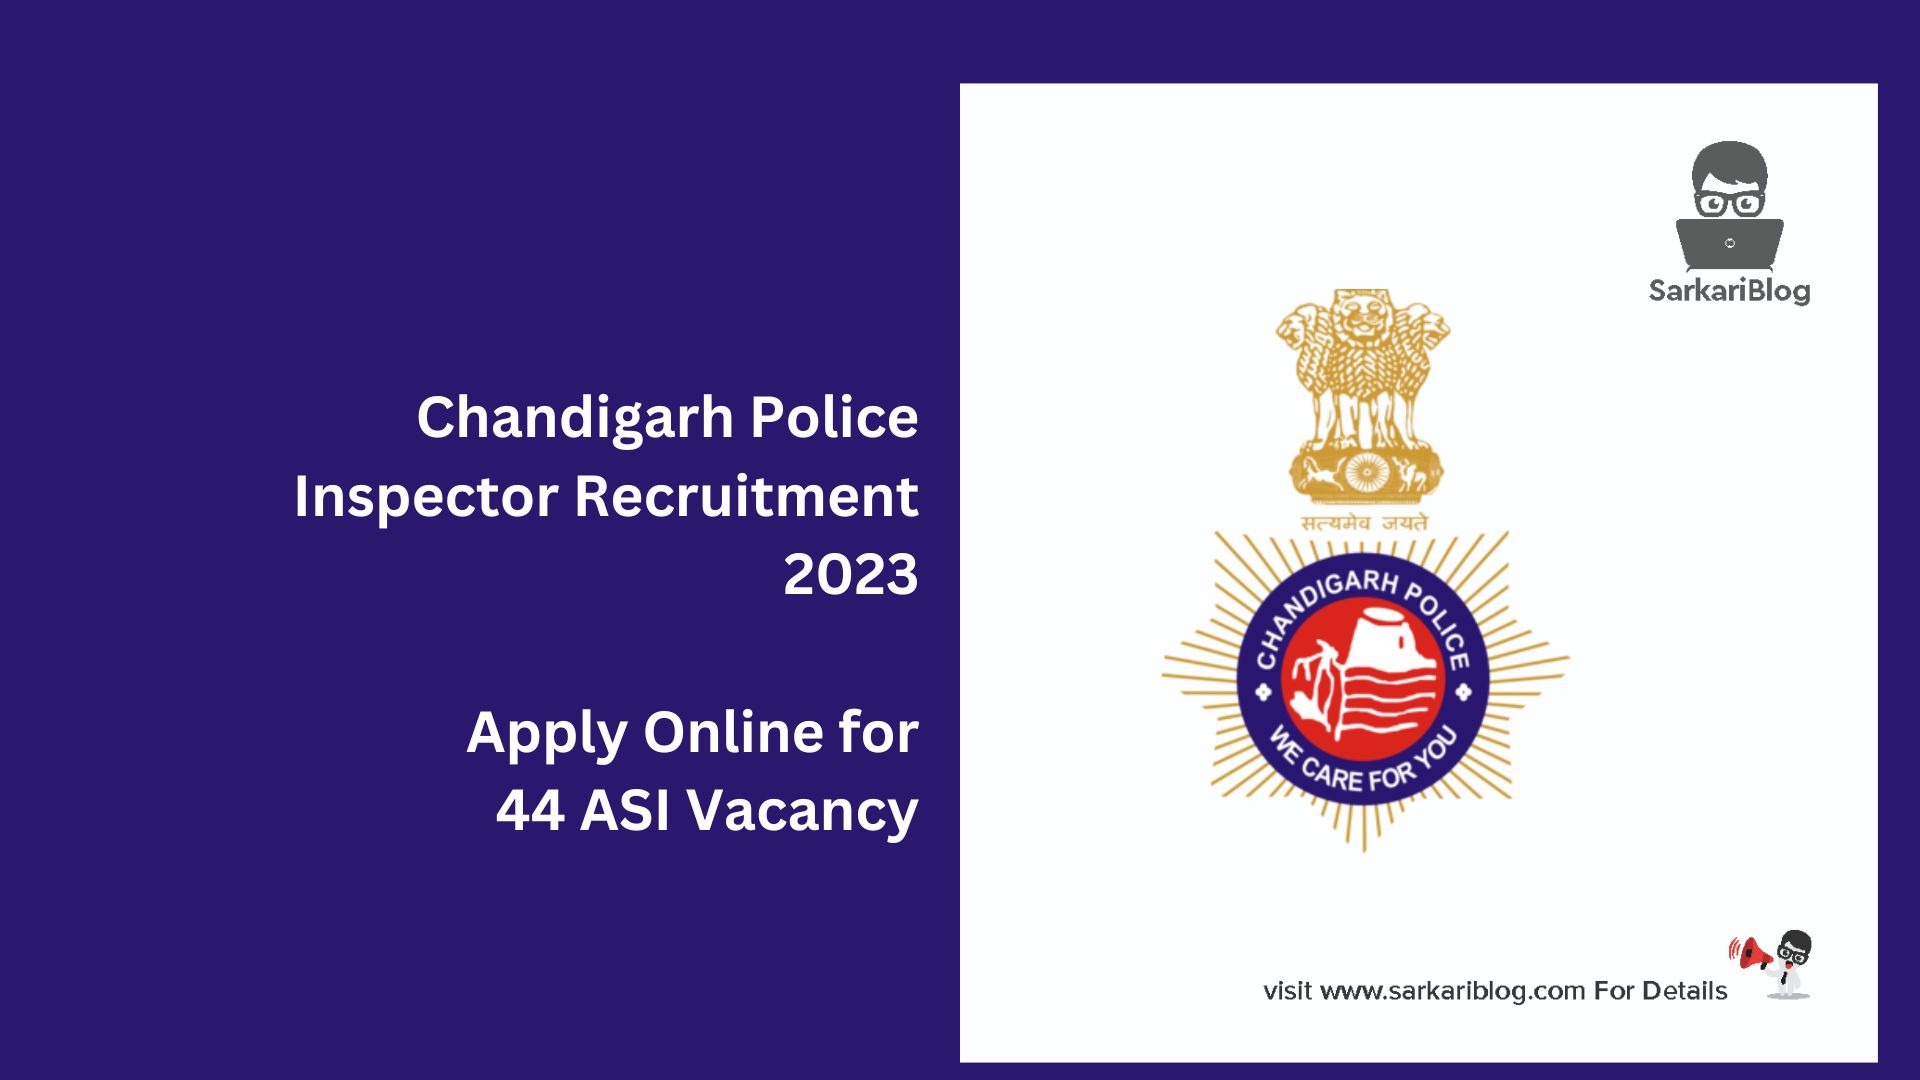 Chandigarh Police Inspector Recruitment 2023